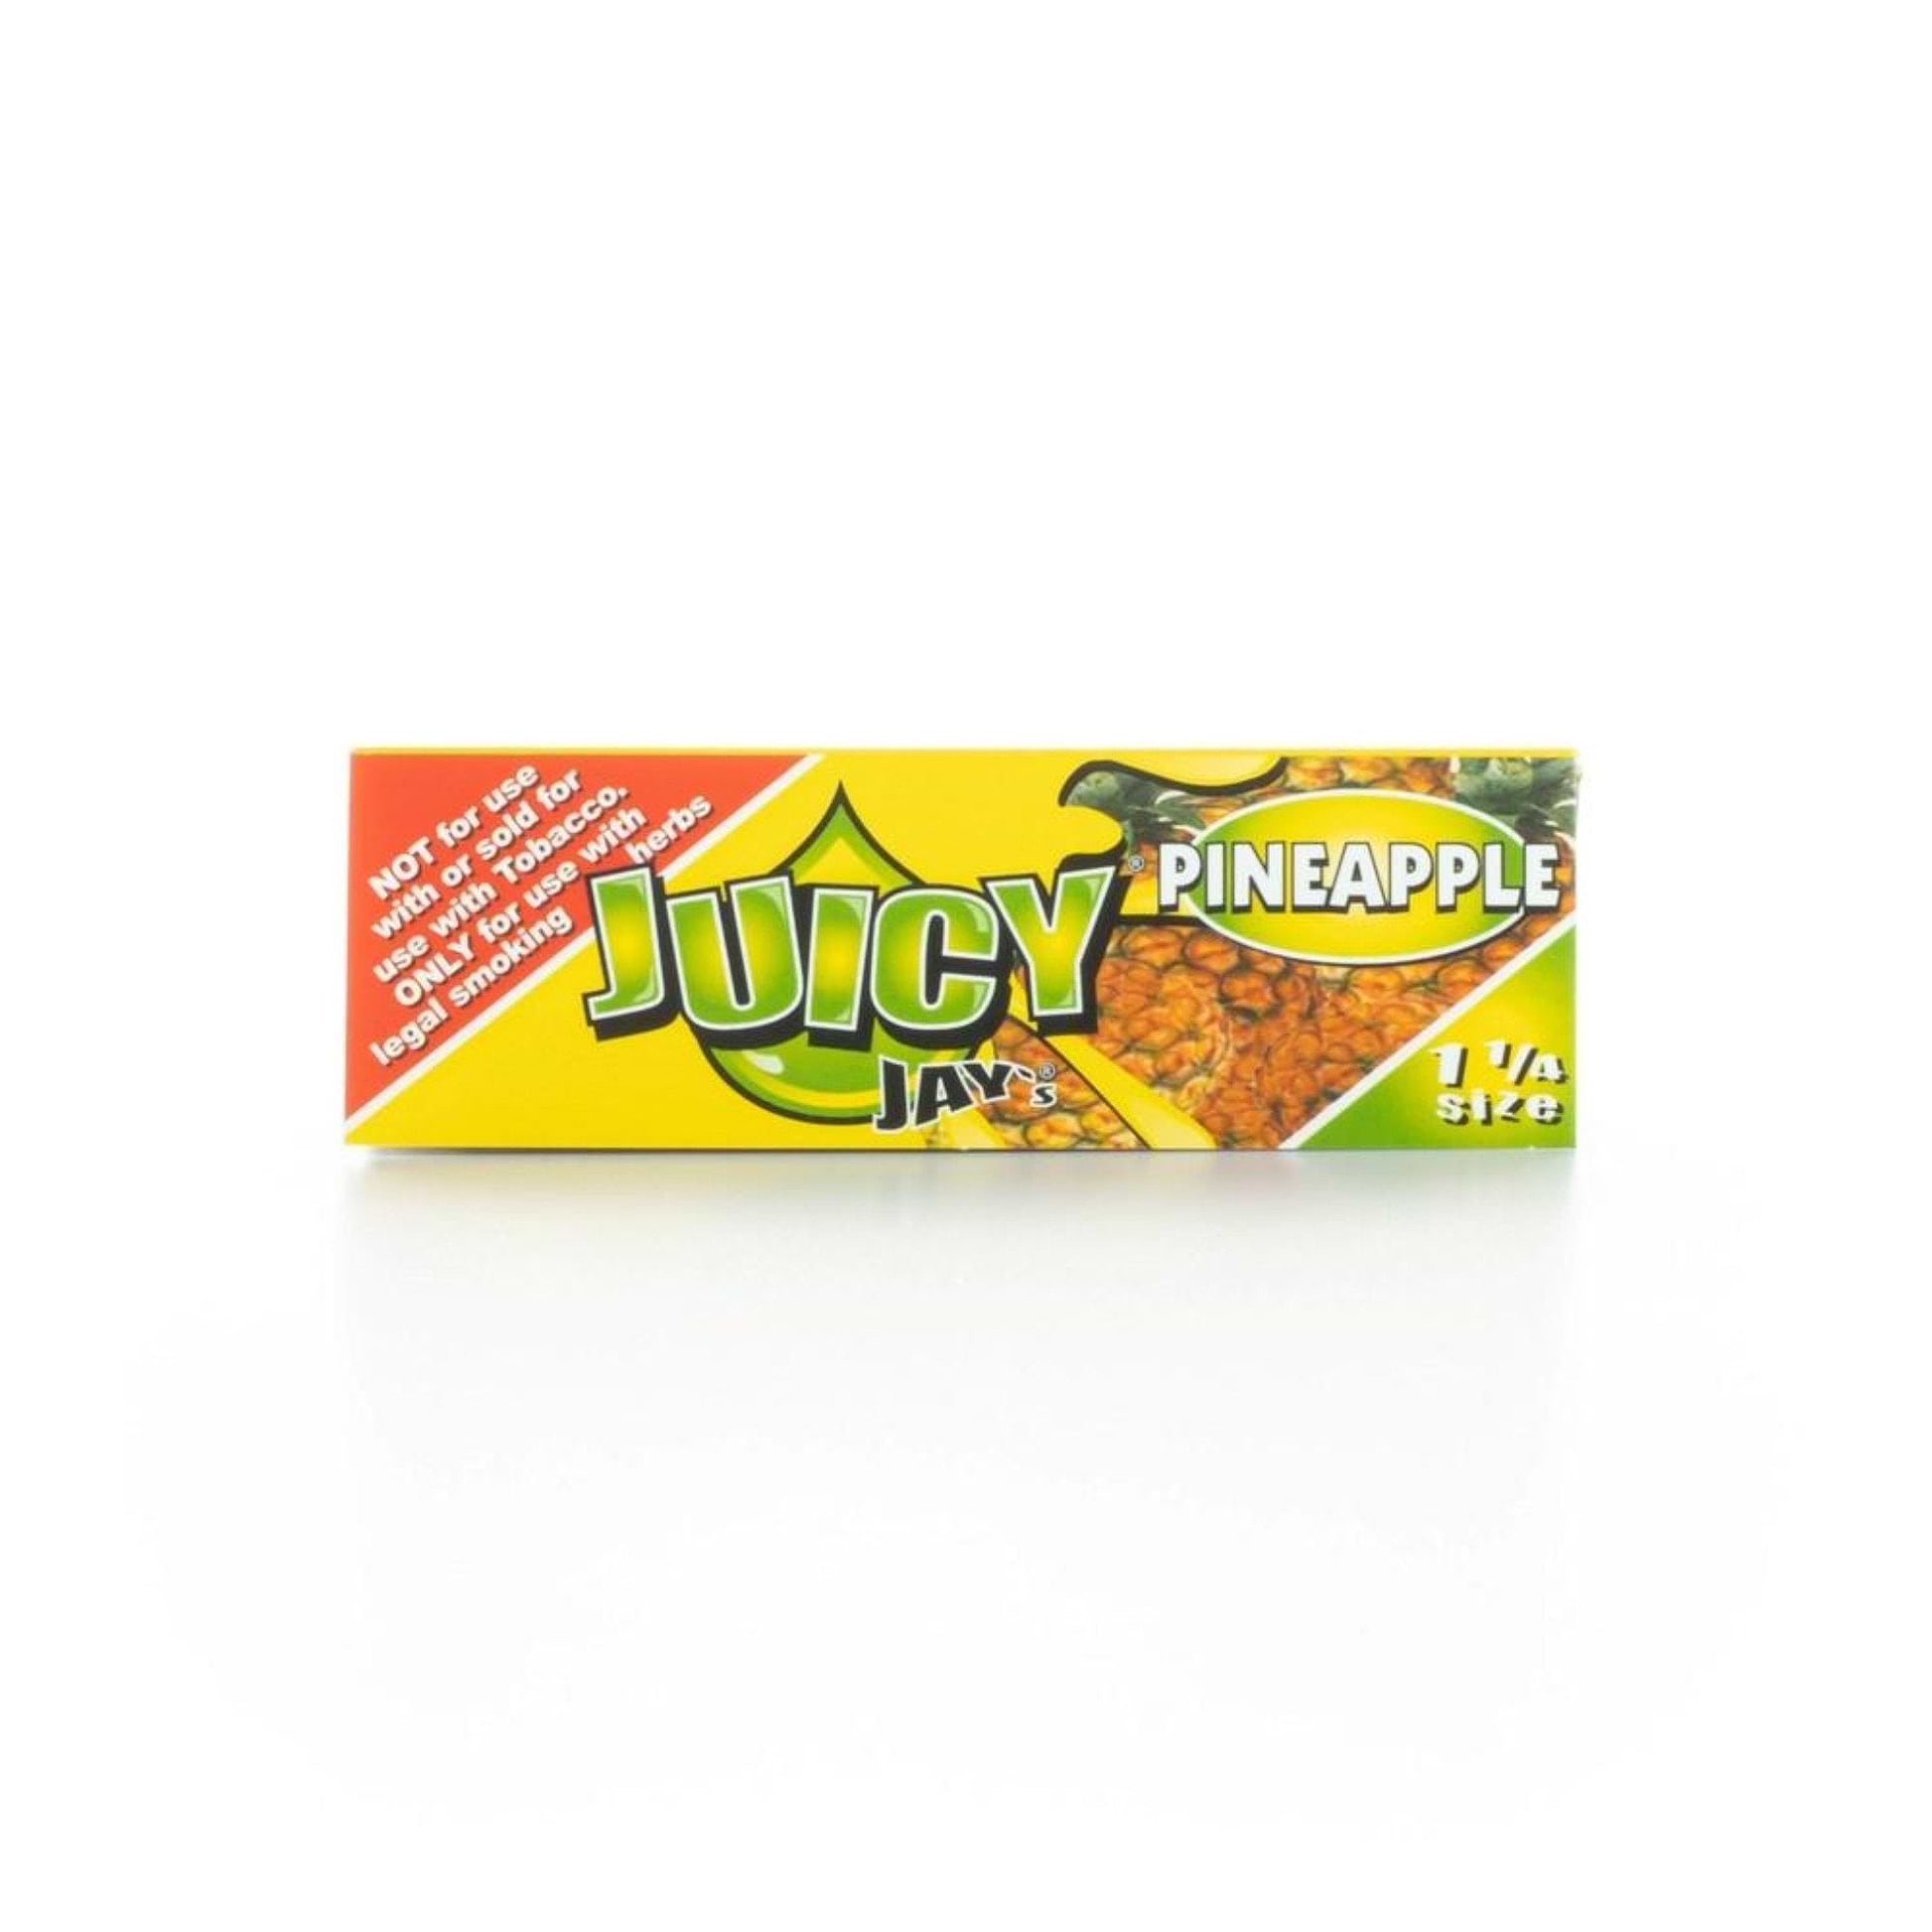 Juicy Jays Rolling Papers - 2 Pack Pineapple